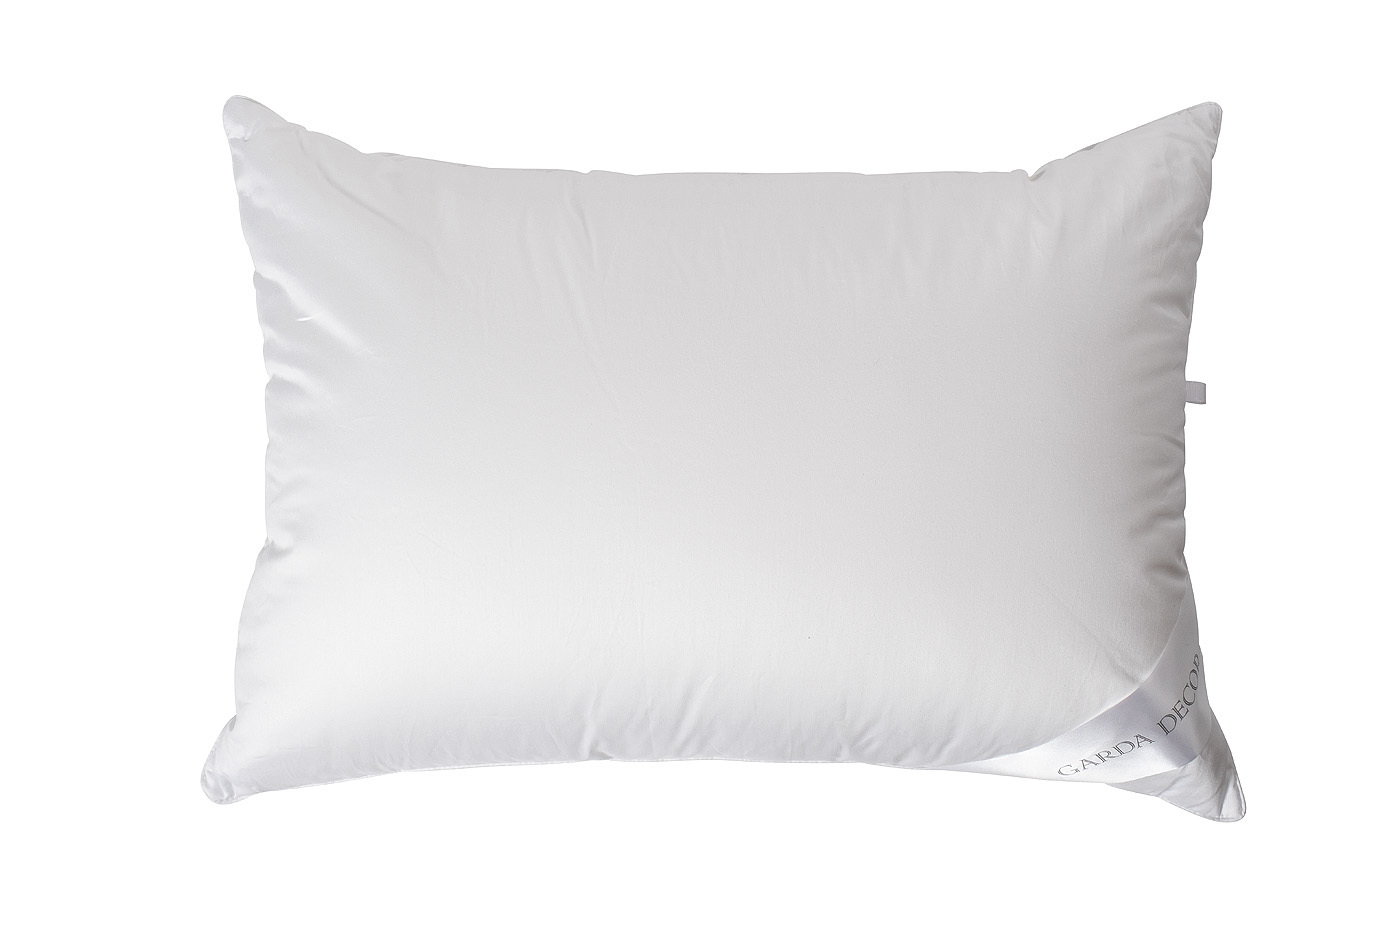 Белые подушки на кровати